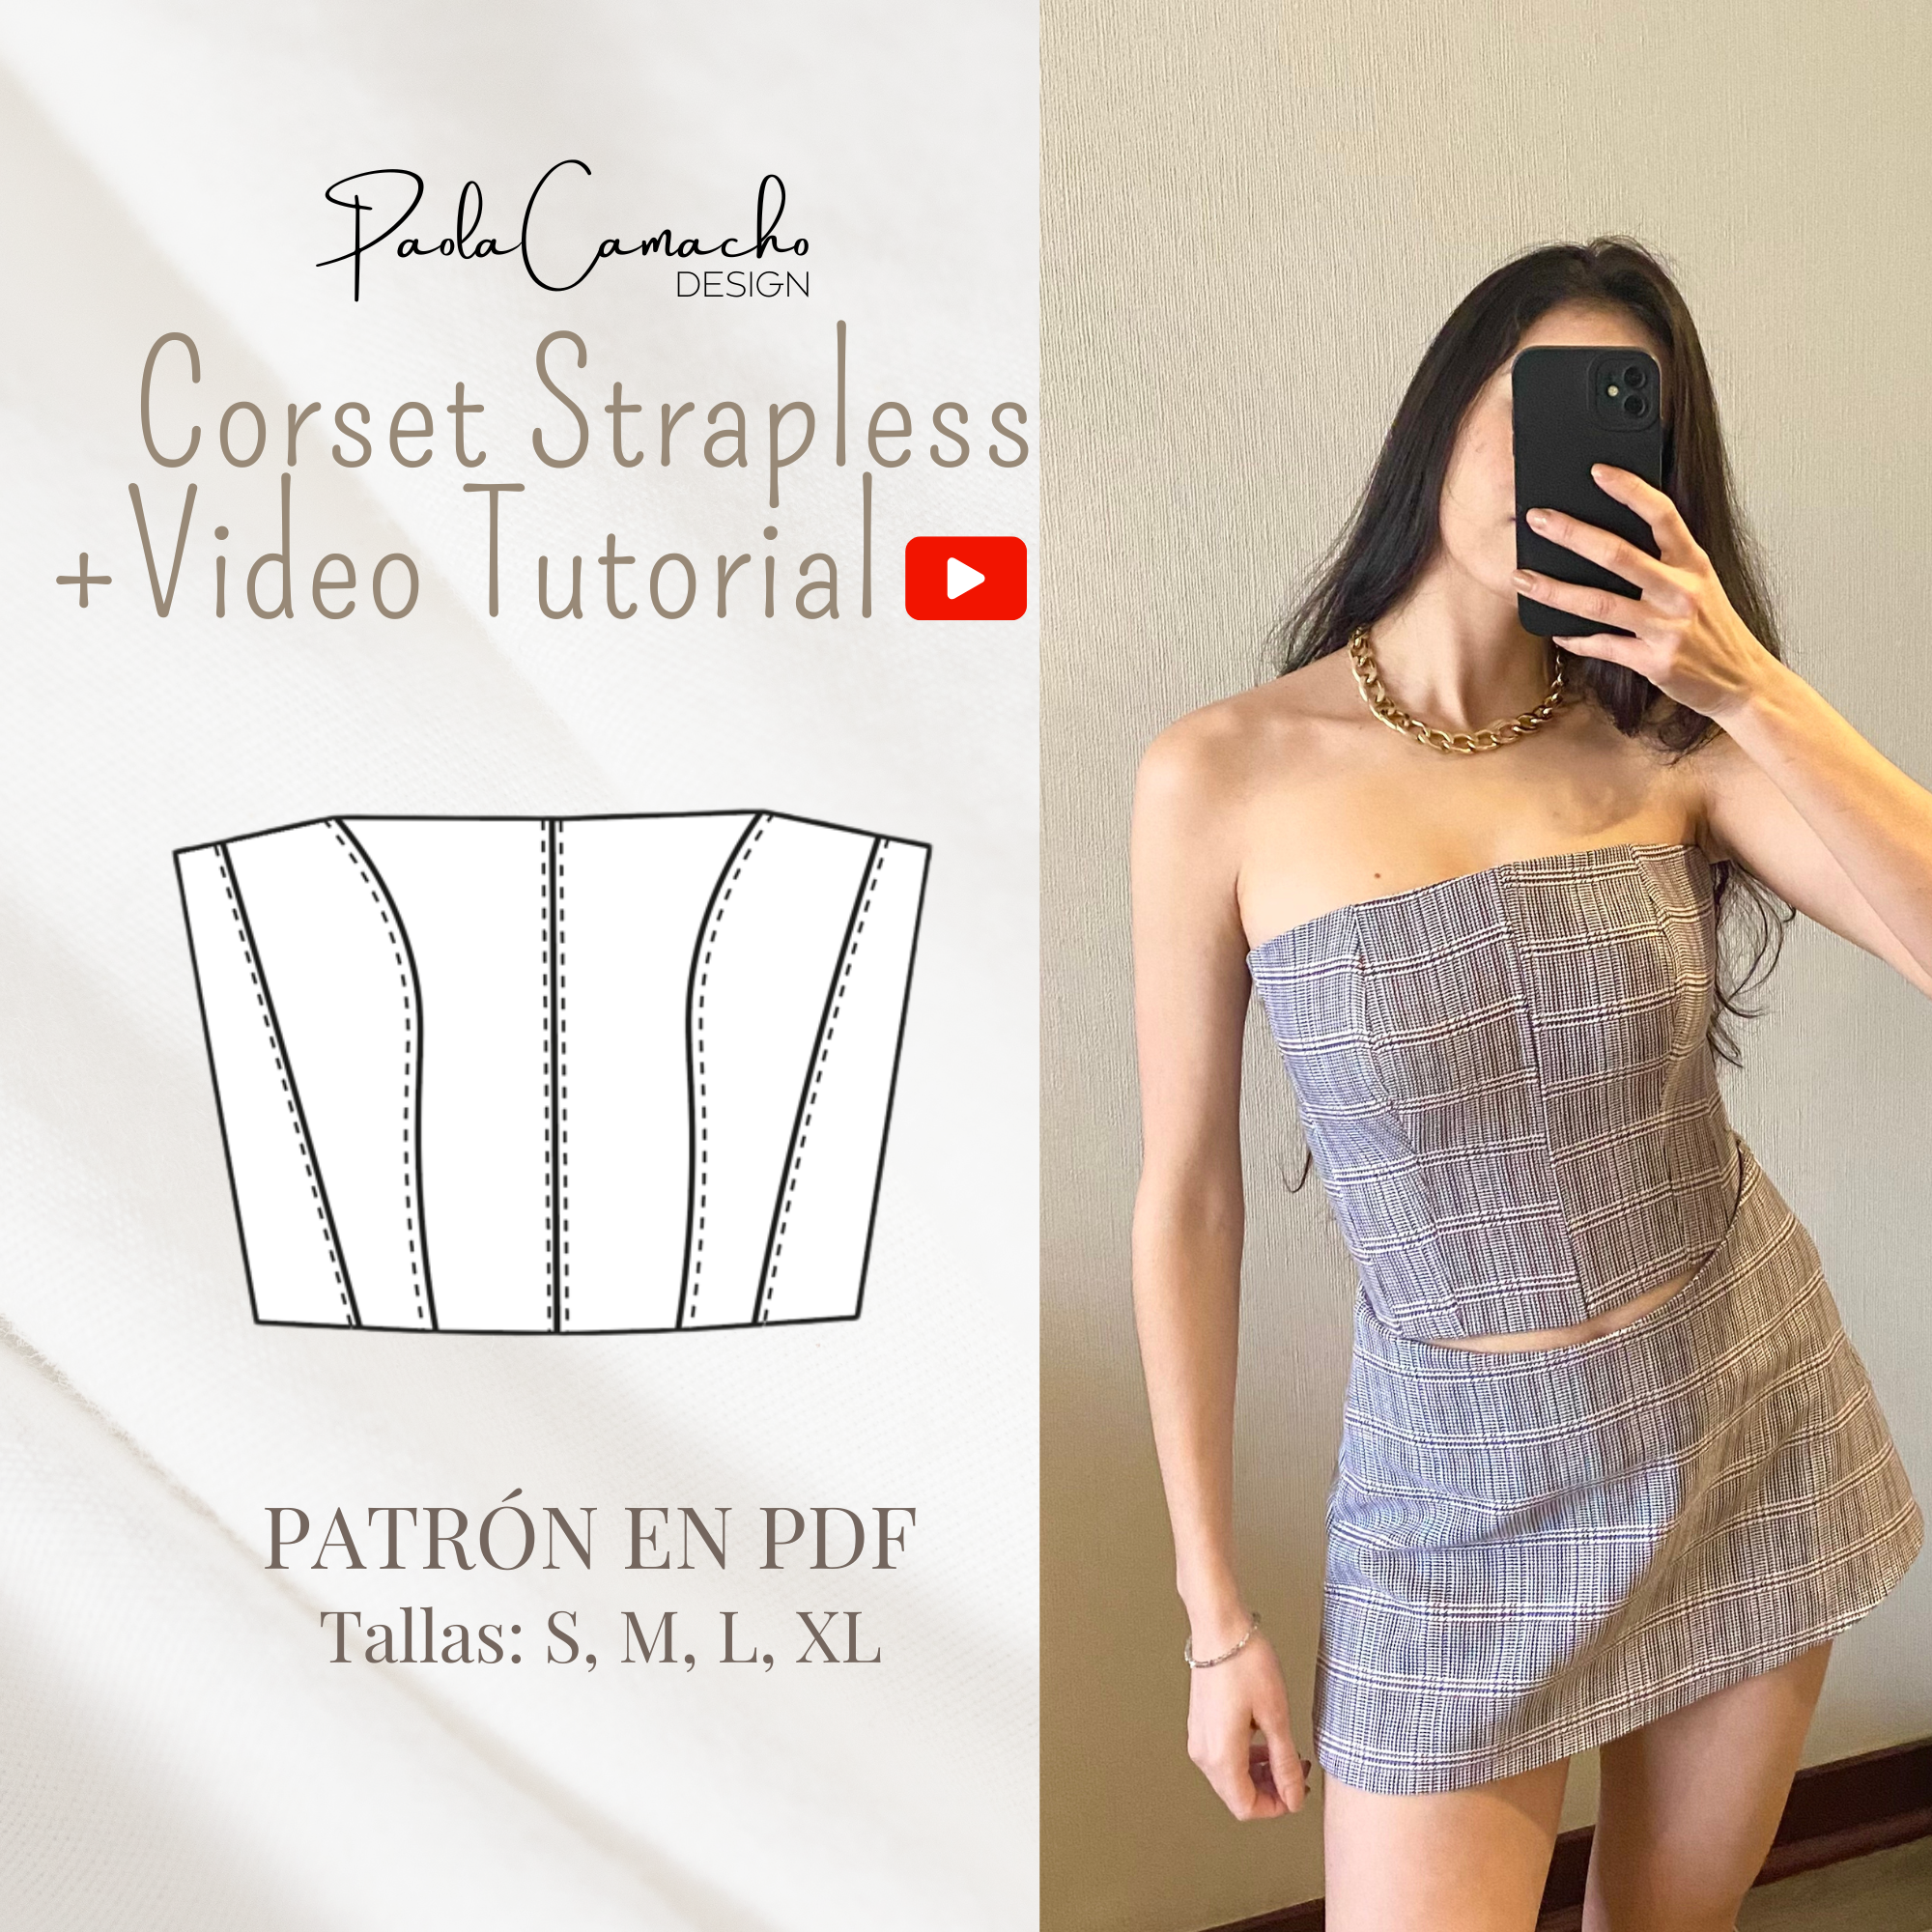 Corset Pattern. How to make a corset? FREE PATTERN 